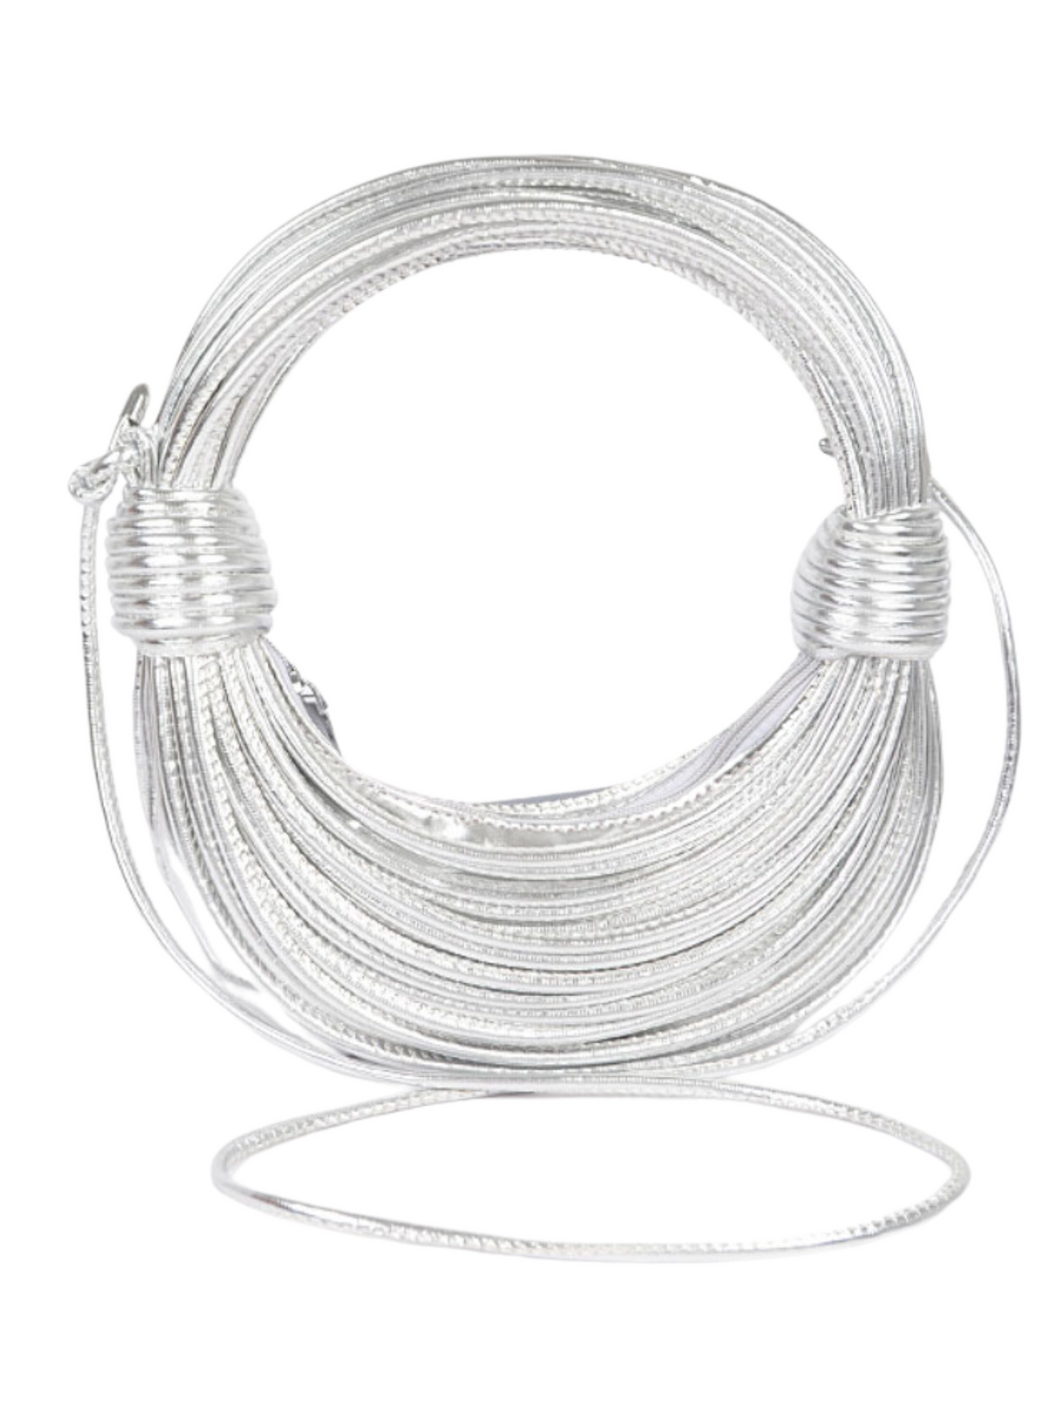 Rope Hobo Bag (Silver)